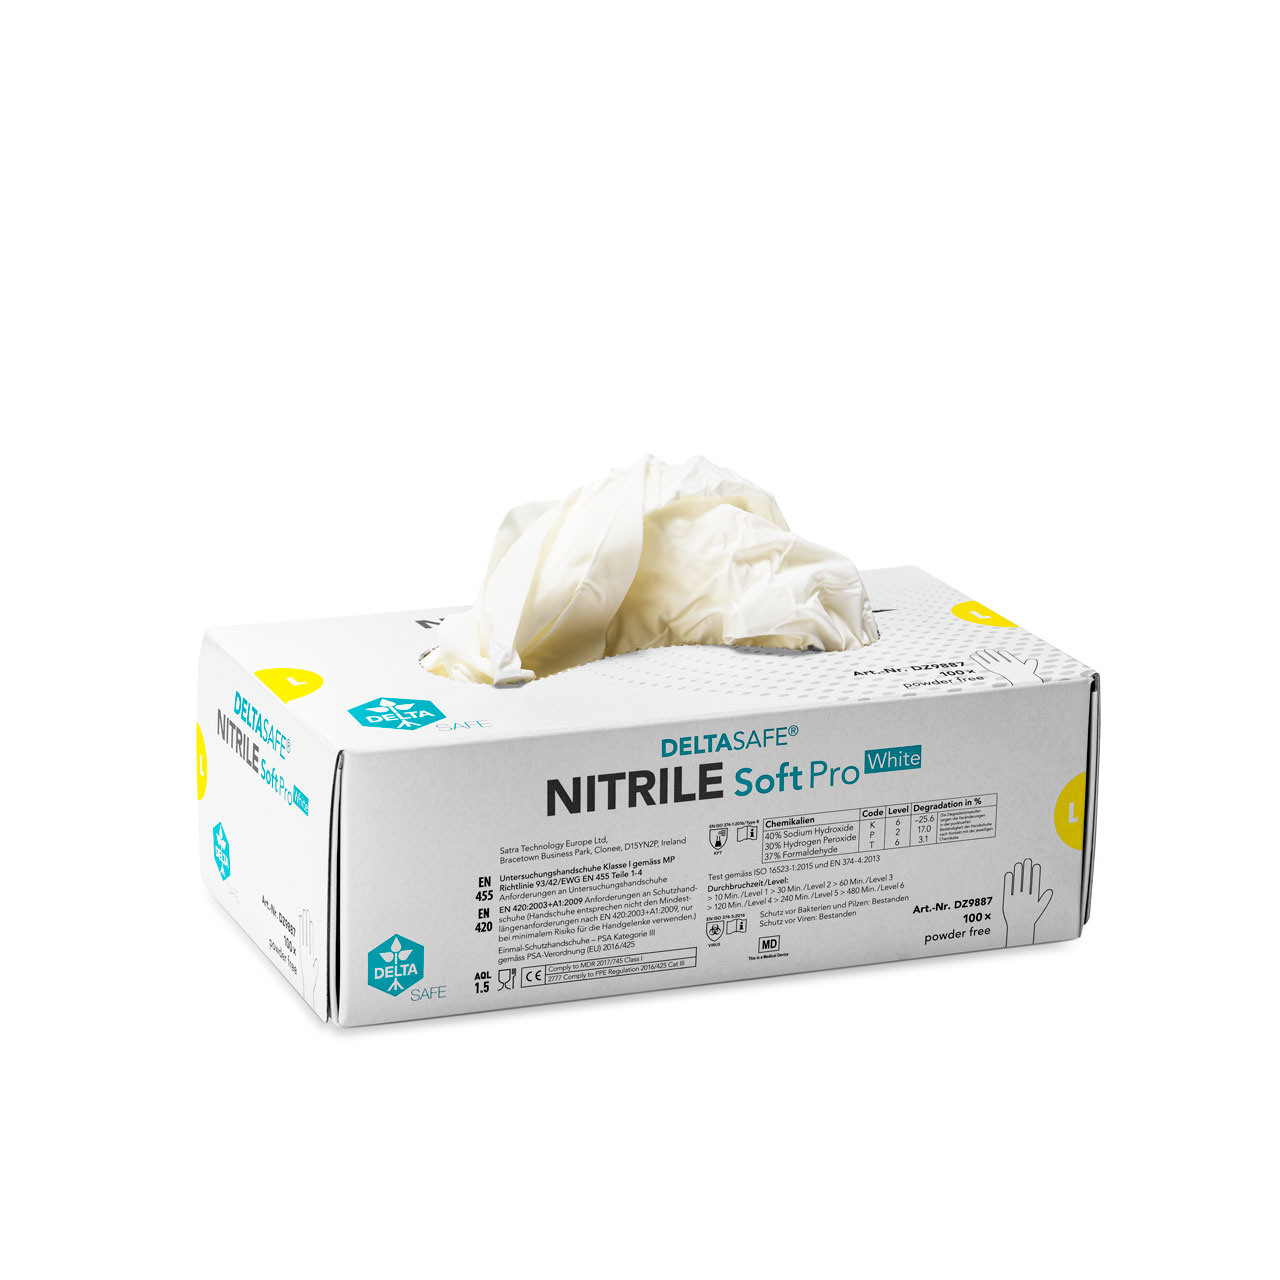 DELTASAFE® NITRILE Soft Pro White, 240 mm, XL